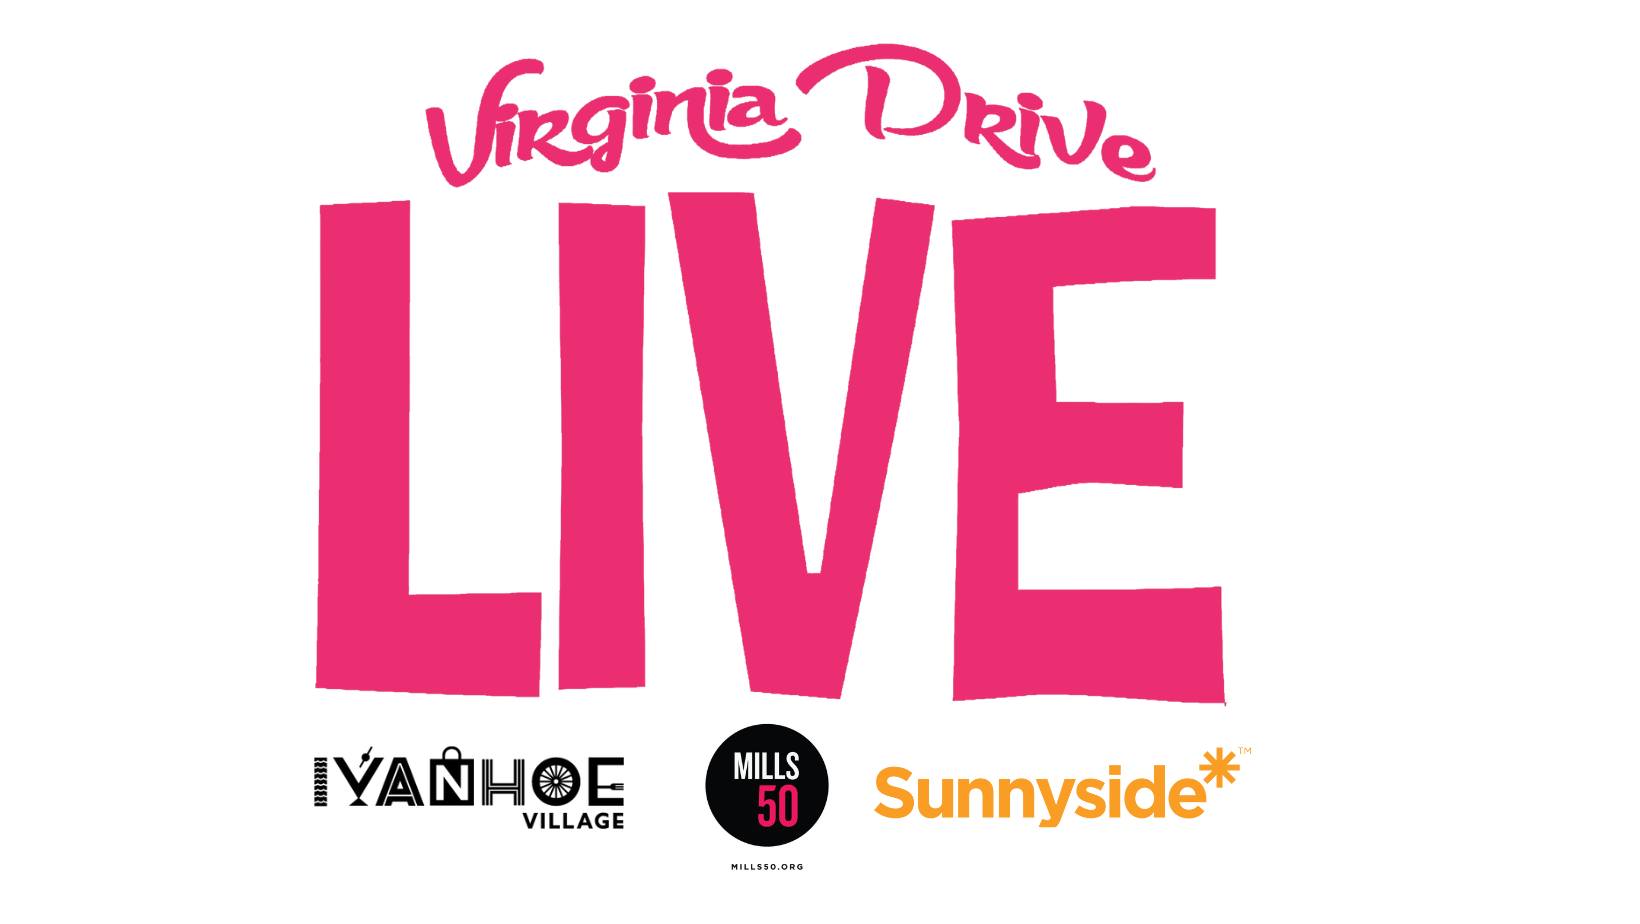 Virginia Drive Live at Ivanhoe Village